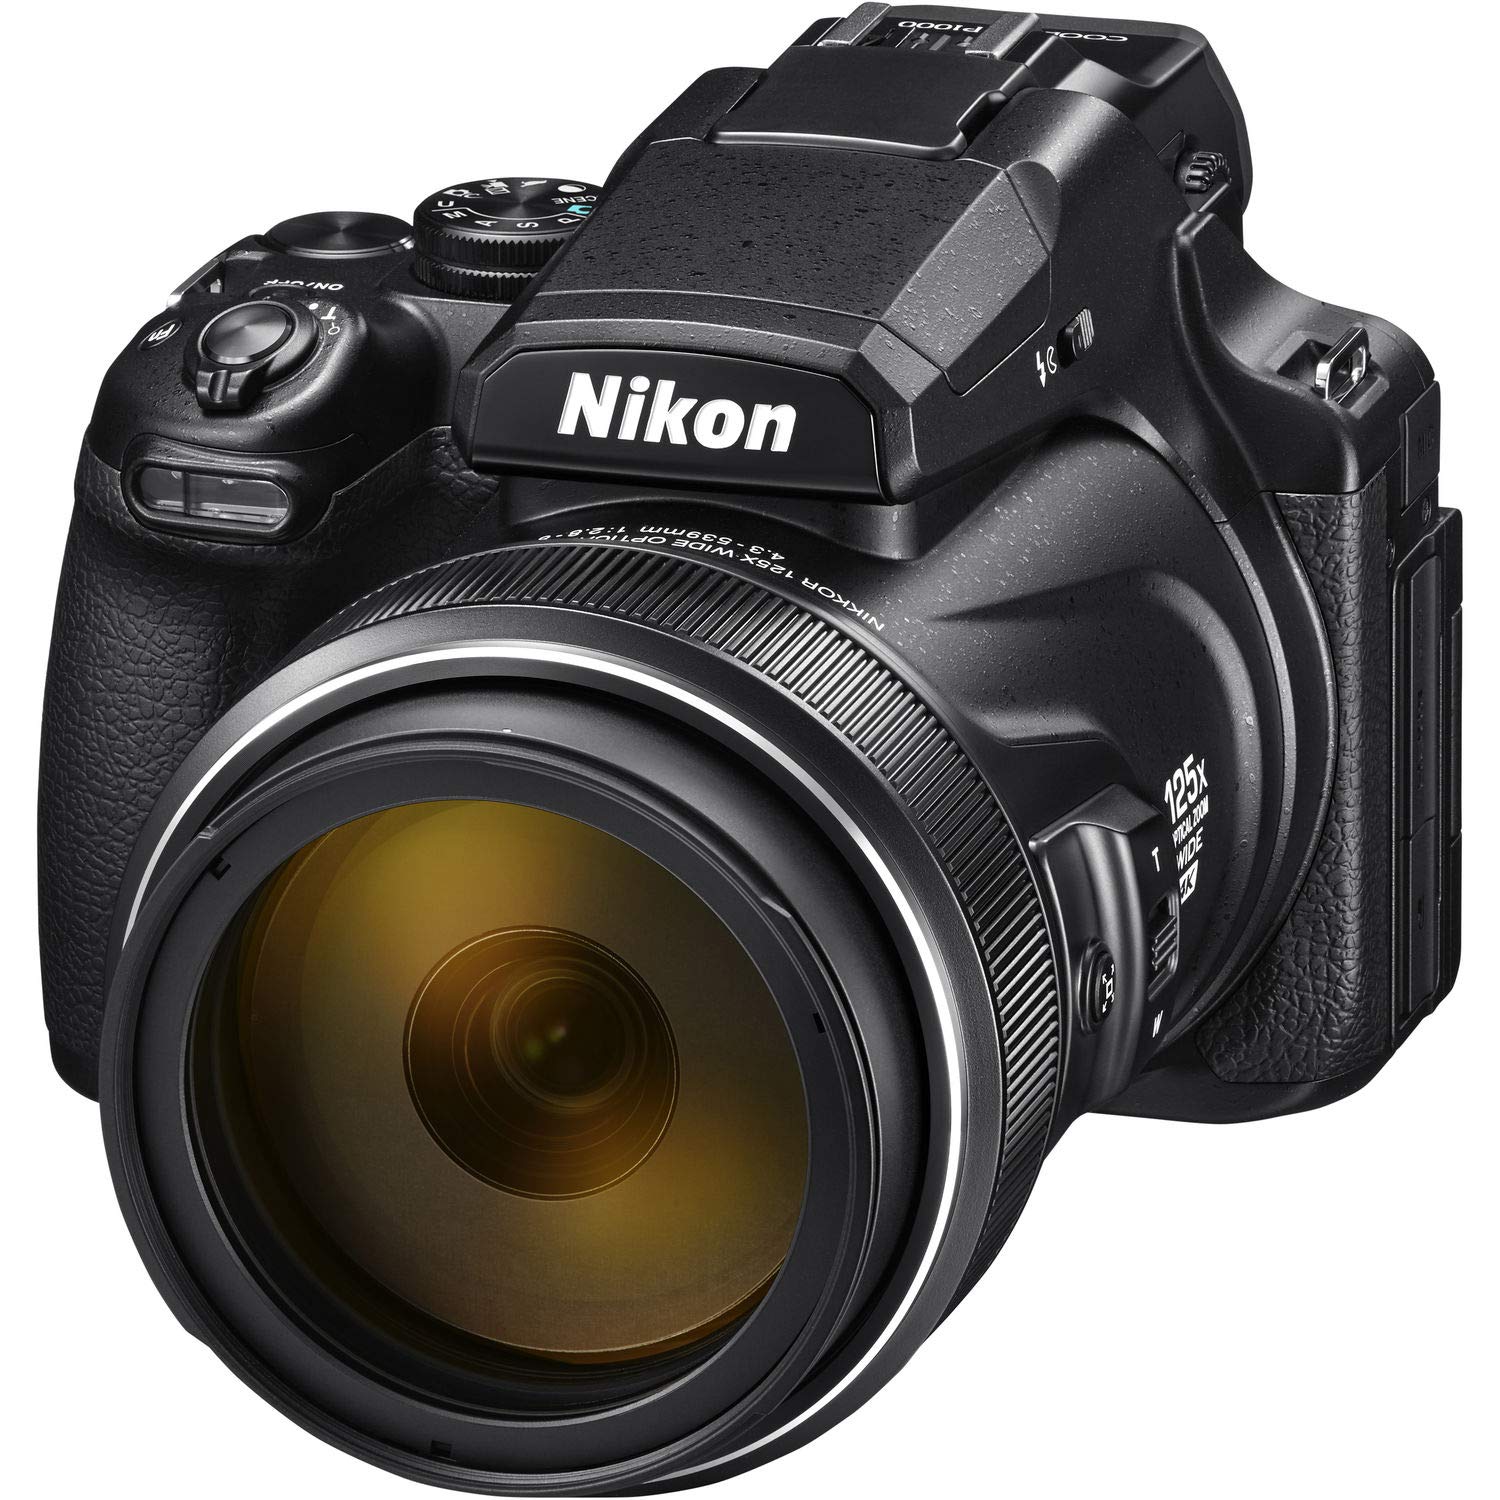 Nikon COOLPIX P1000 Digital Camera + 256GB Sandisk Extreme Memory Card Professional Bundle International Model